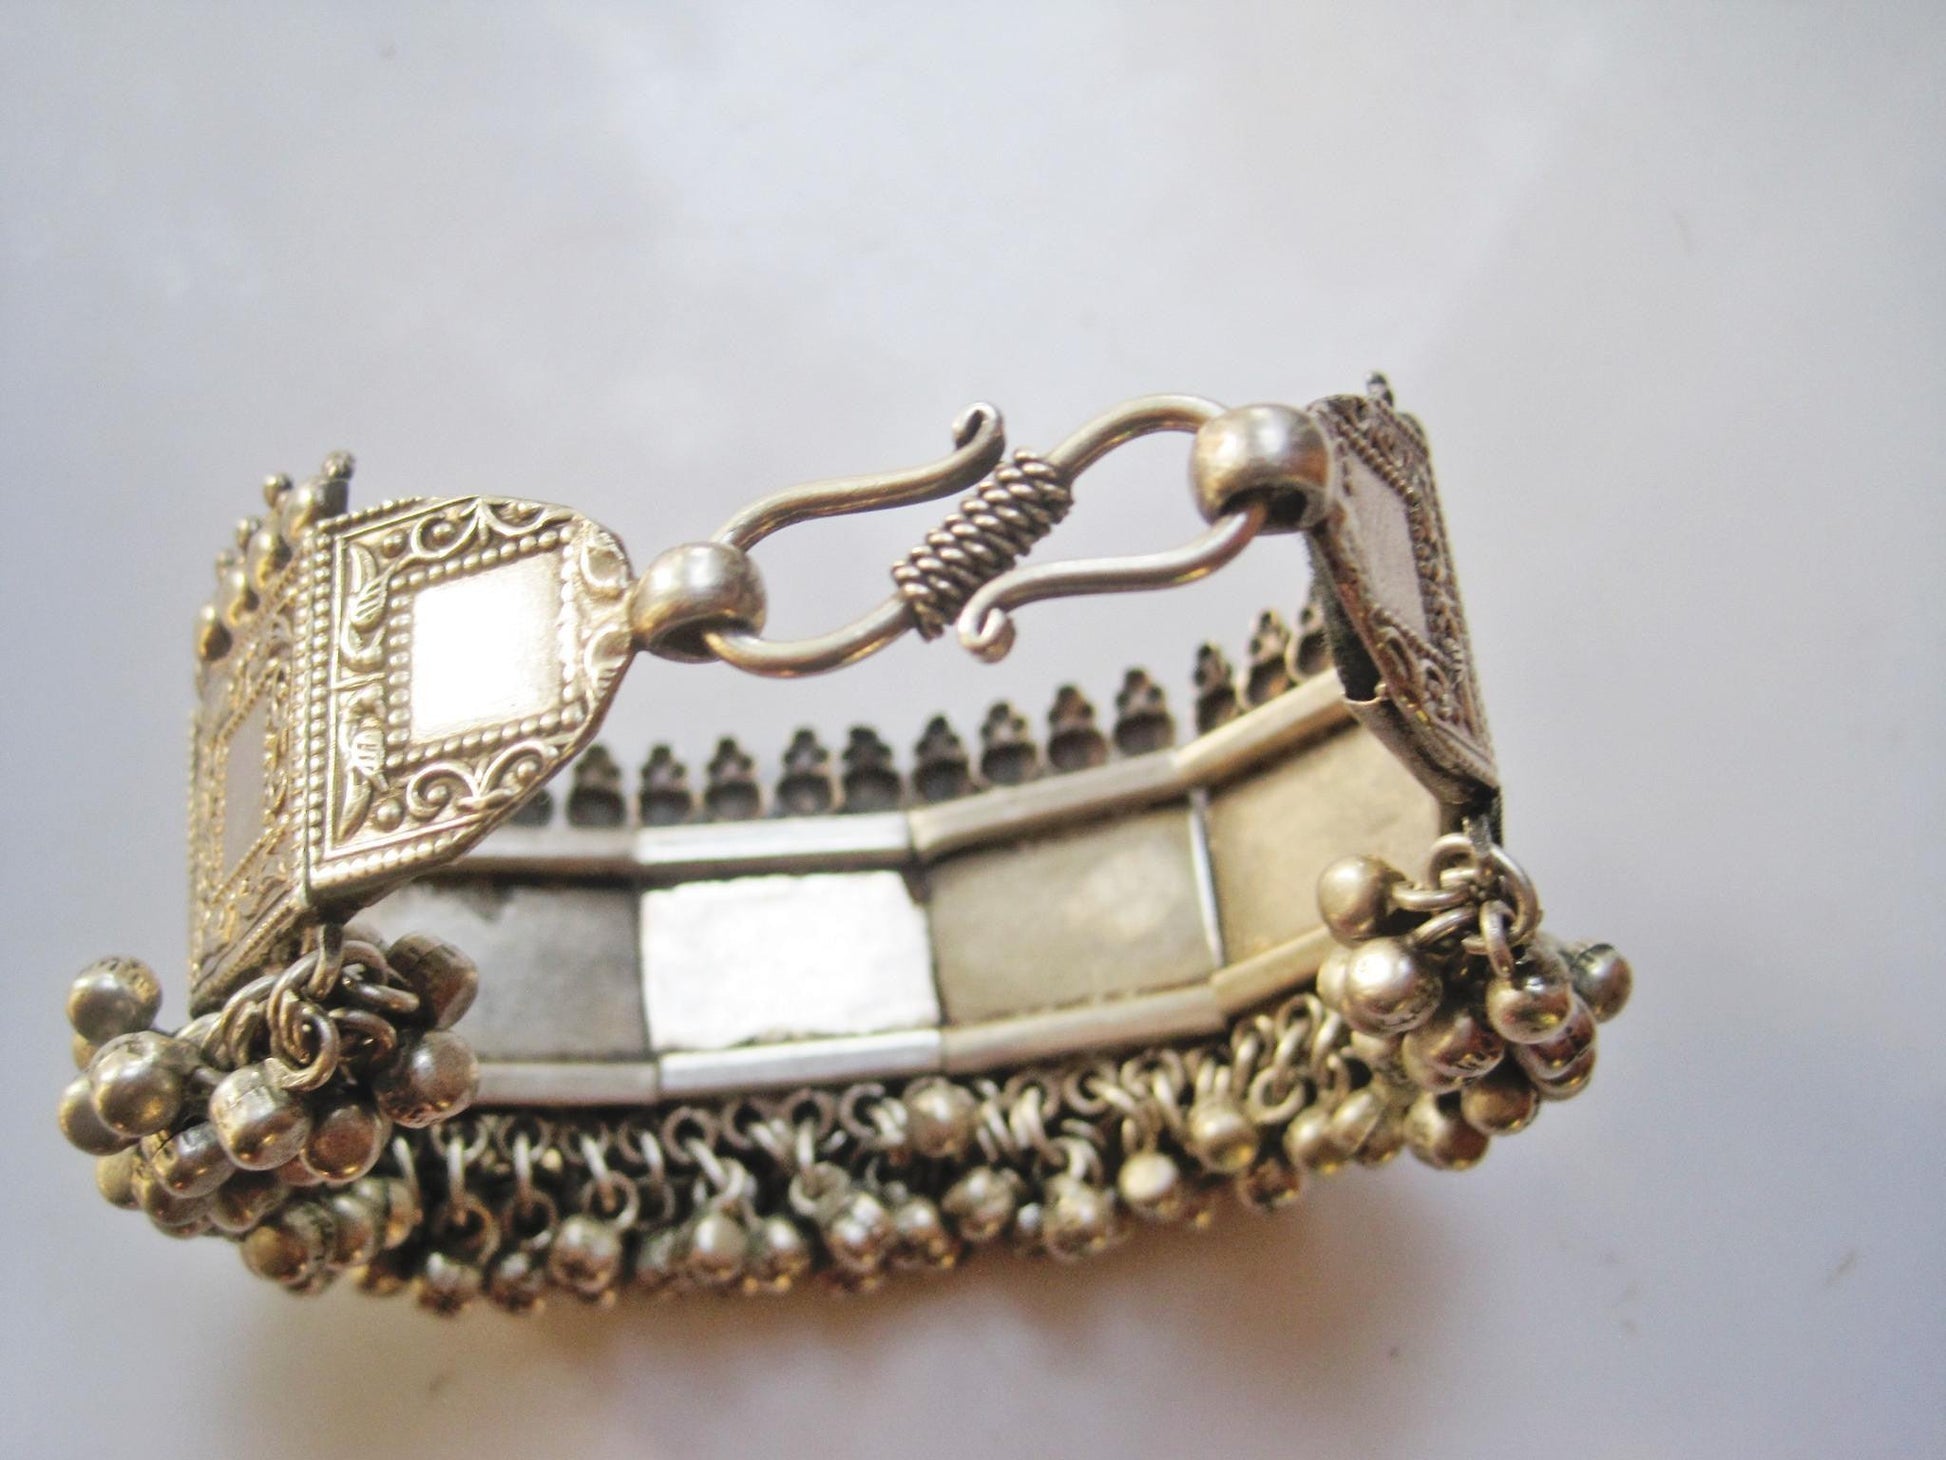 Vintage Silver Arm Indian Bracelet or Bazuband from Rajsathan - Anteeka